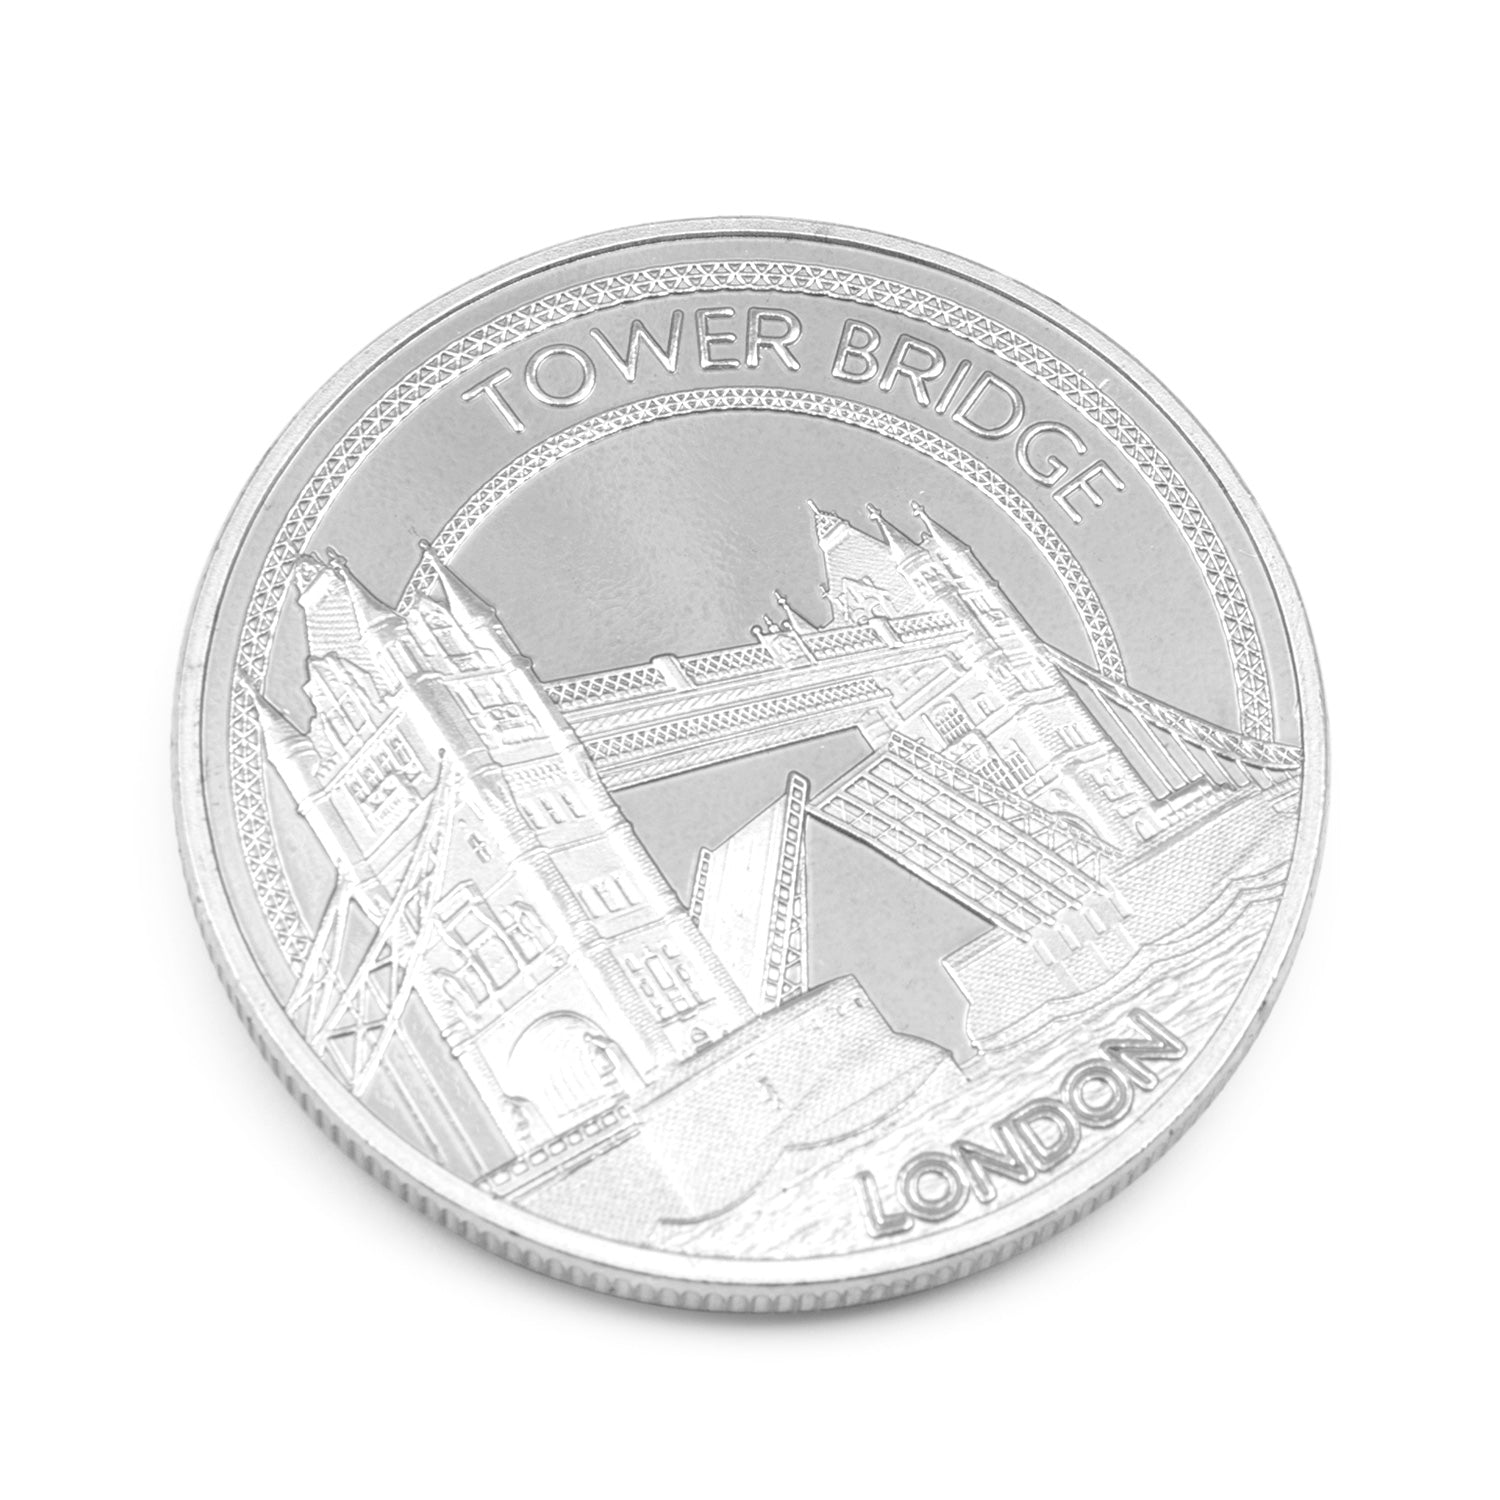 Tower Bridge Silver Medal Coin 3